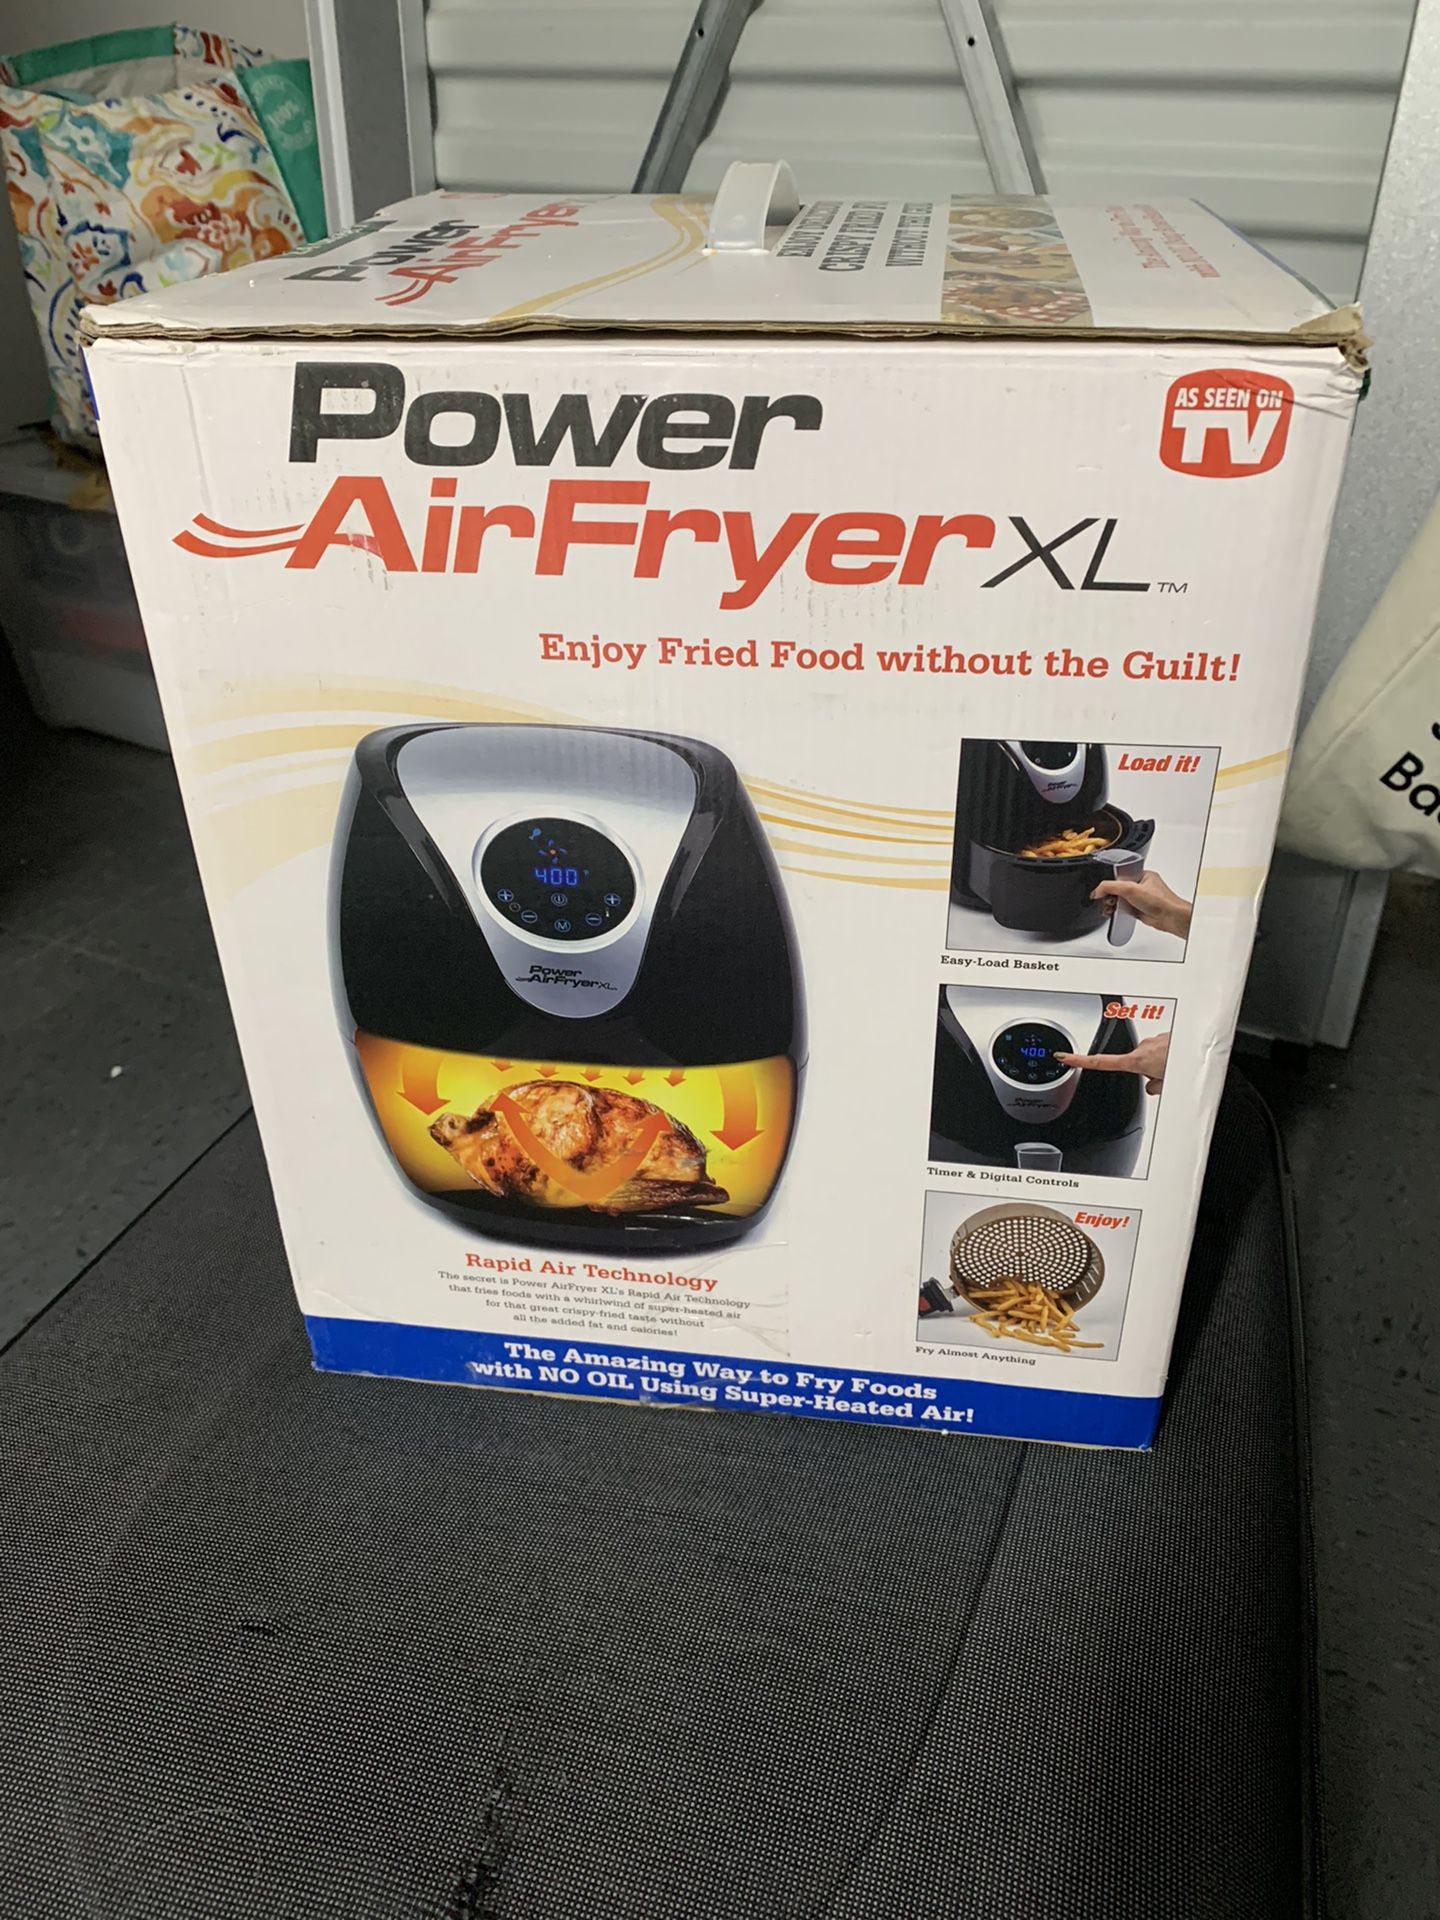 Power Air Fryer XL New 2,4 Quat - Unopened Box Brand New